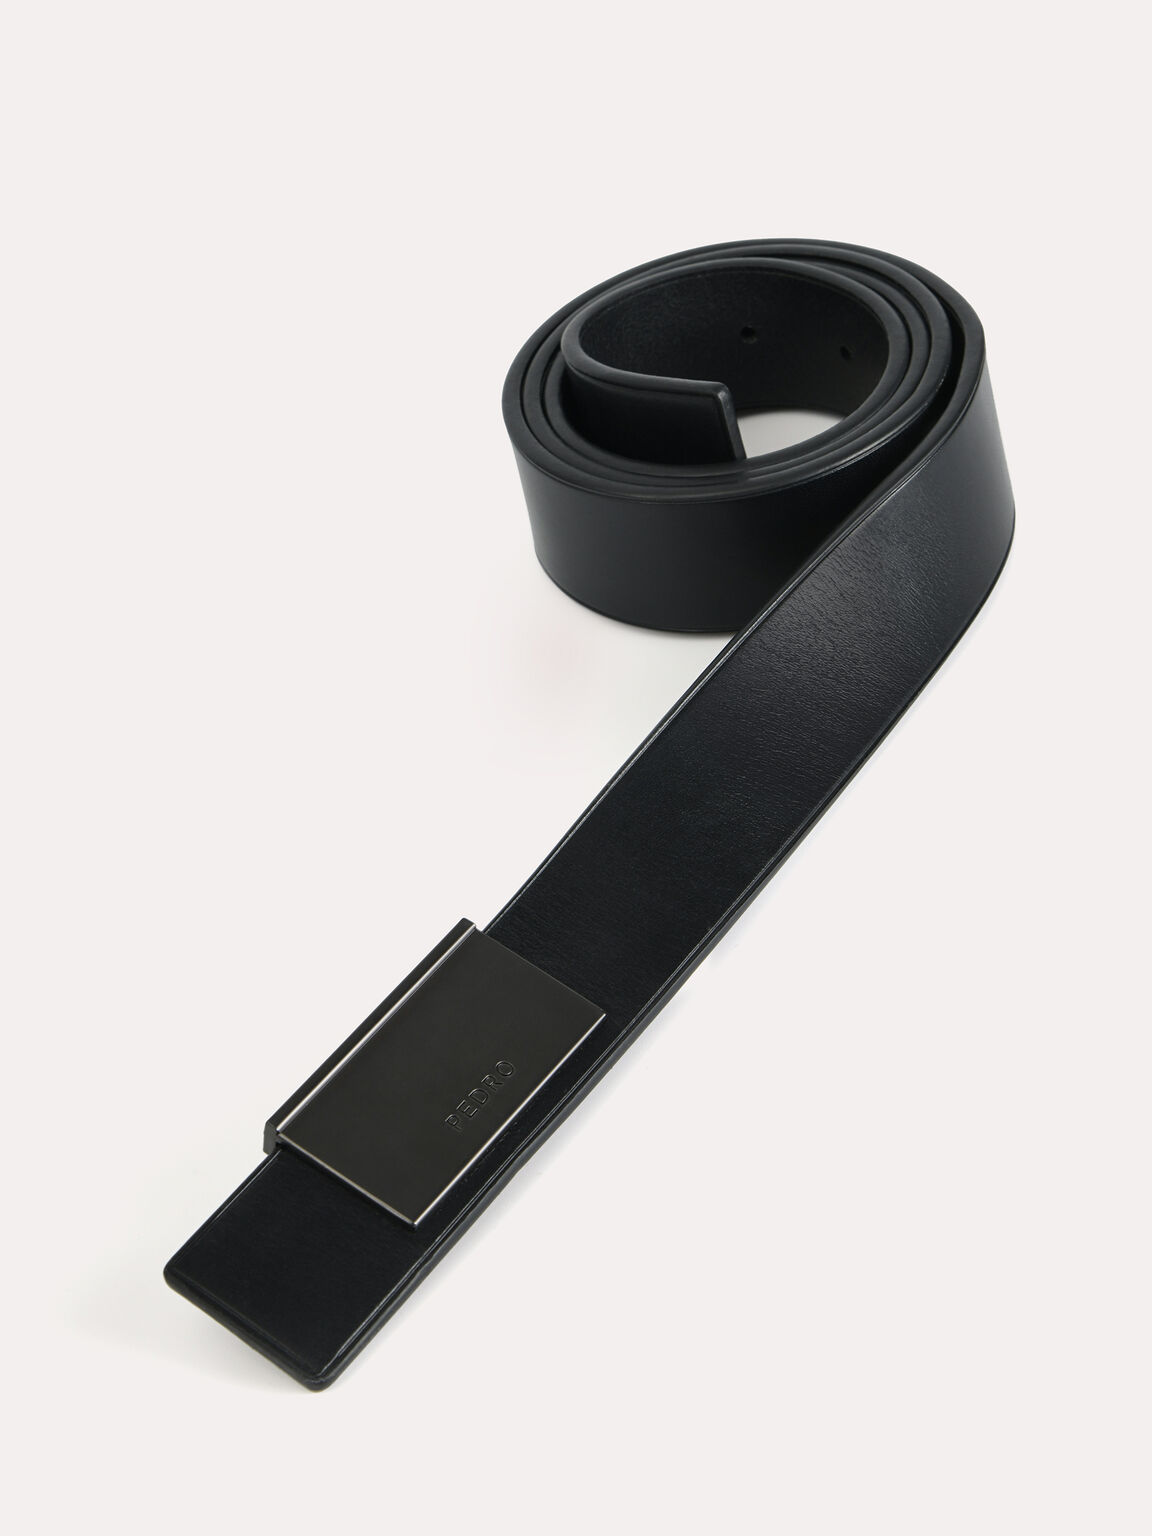 Leather Tang Belt, Black